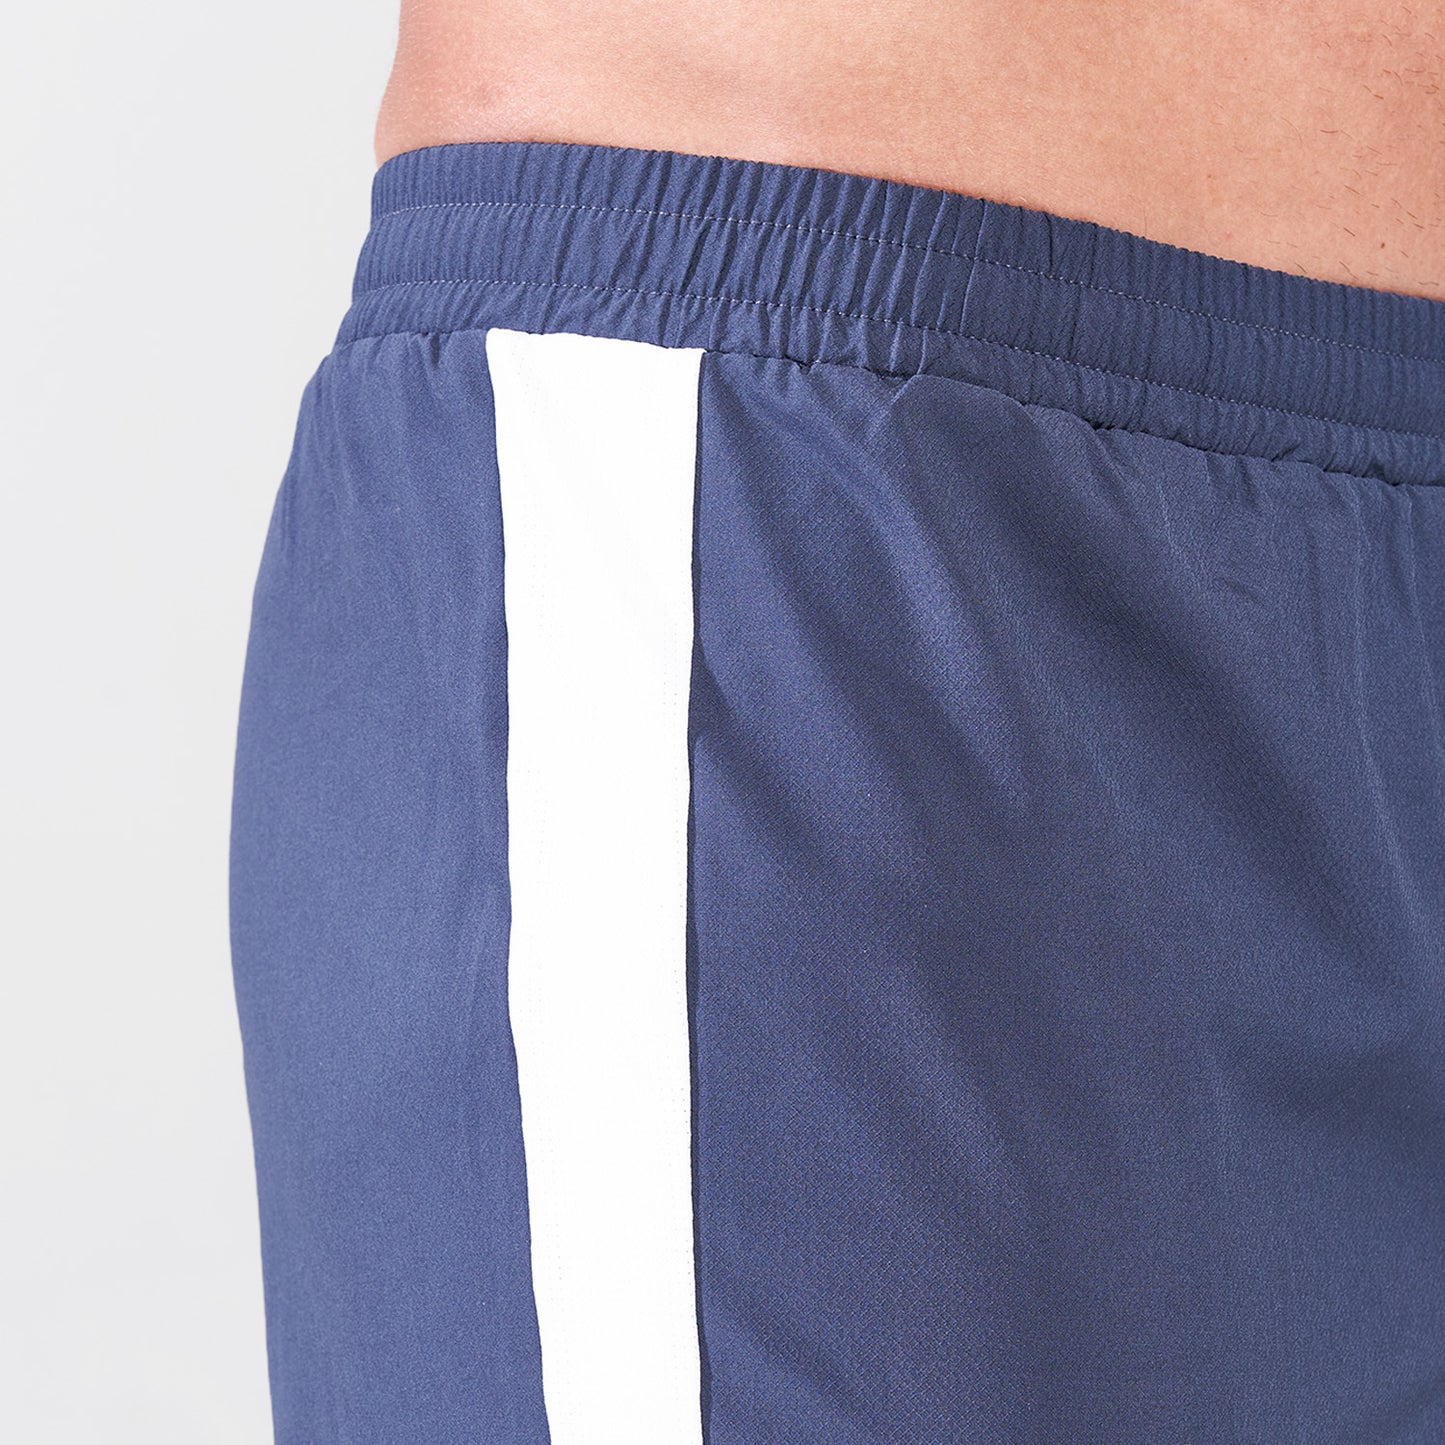 squatwolf-gym-wear-lab-360-2-in-1-legging-shorts-blue-workout-shorts-for-men